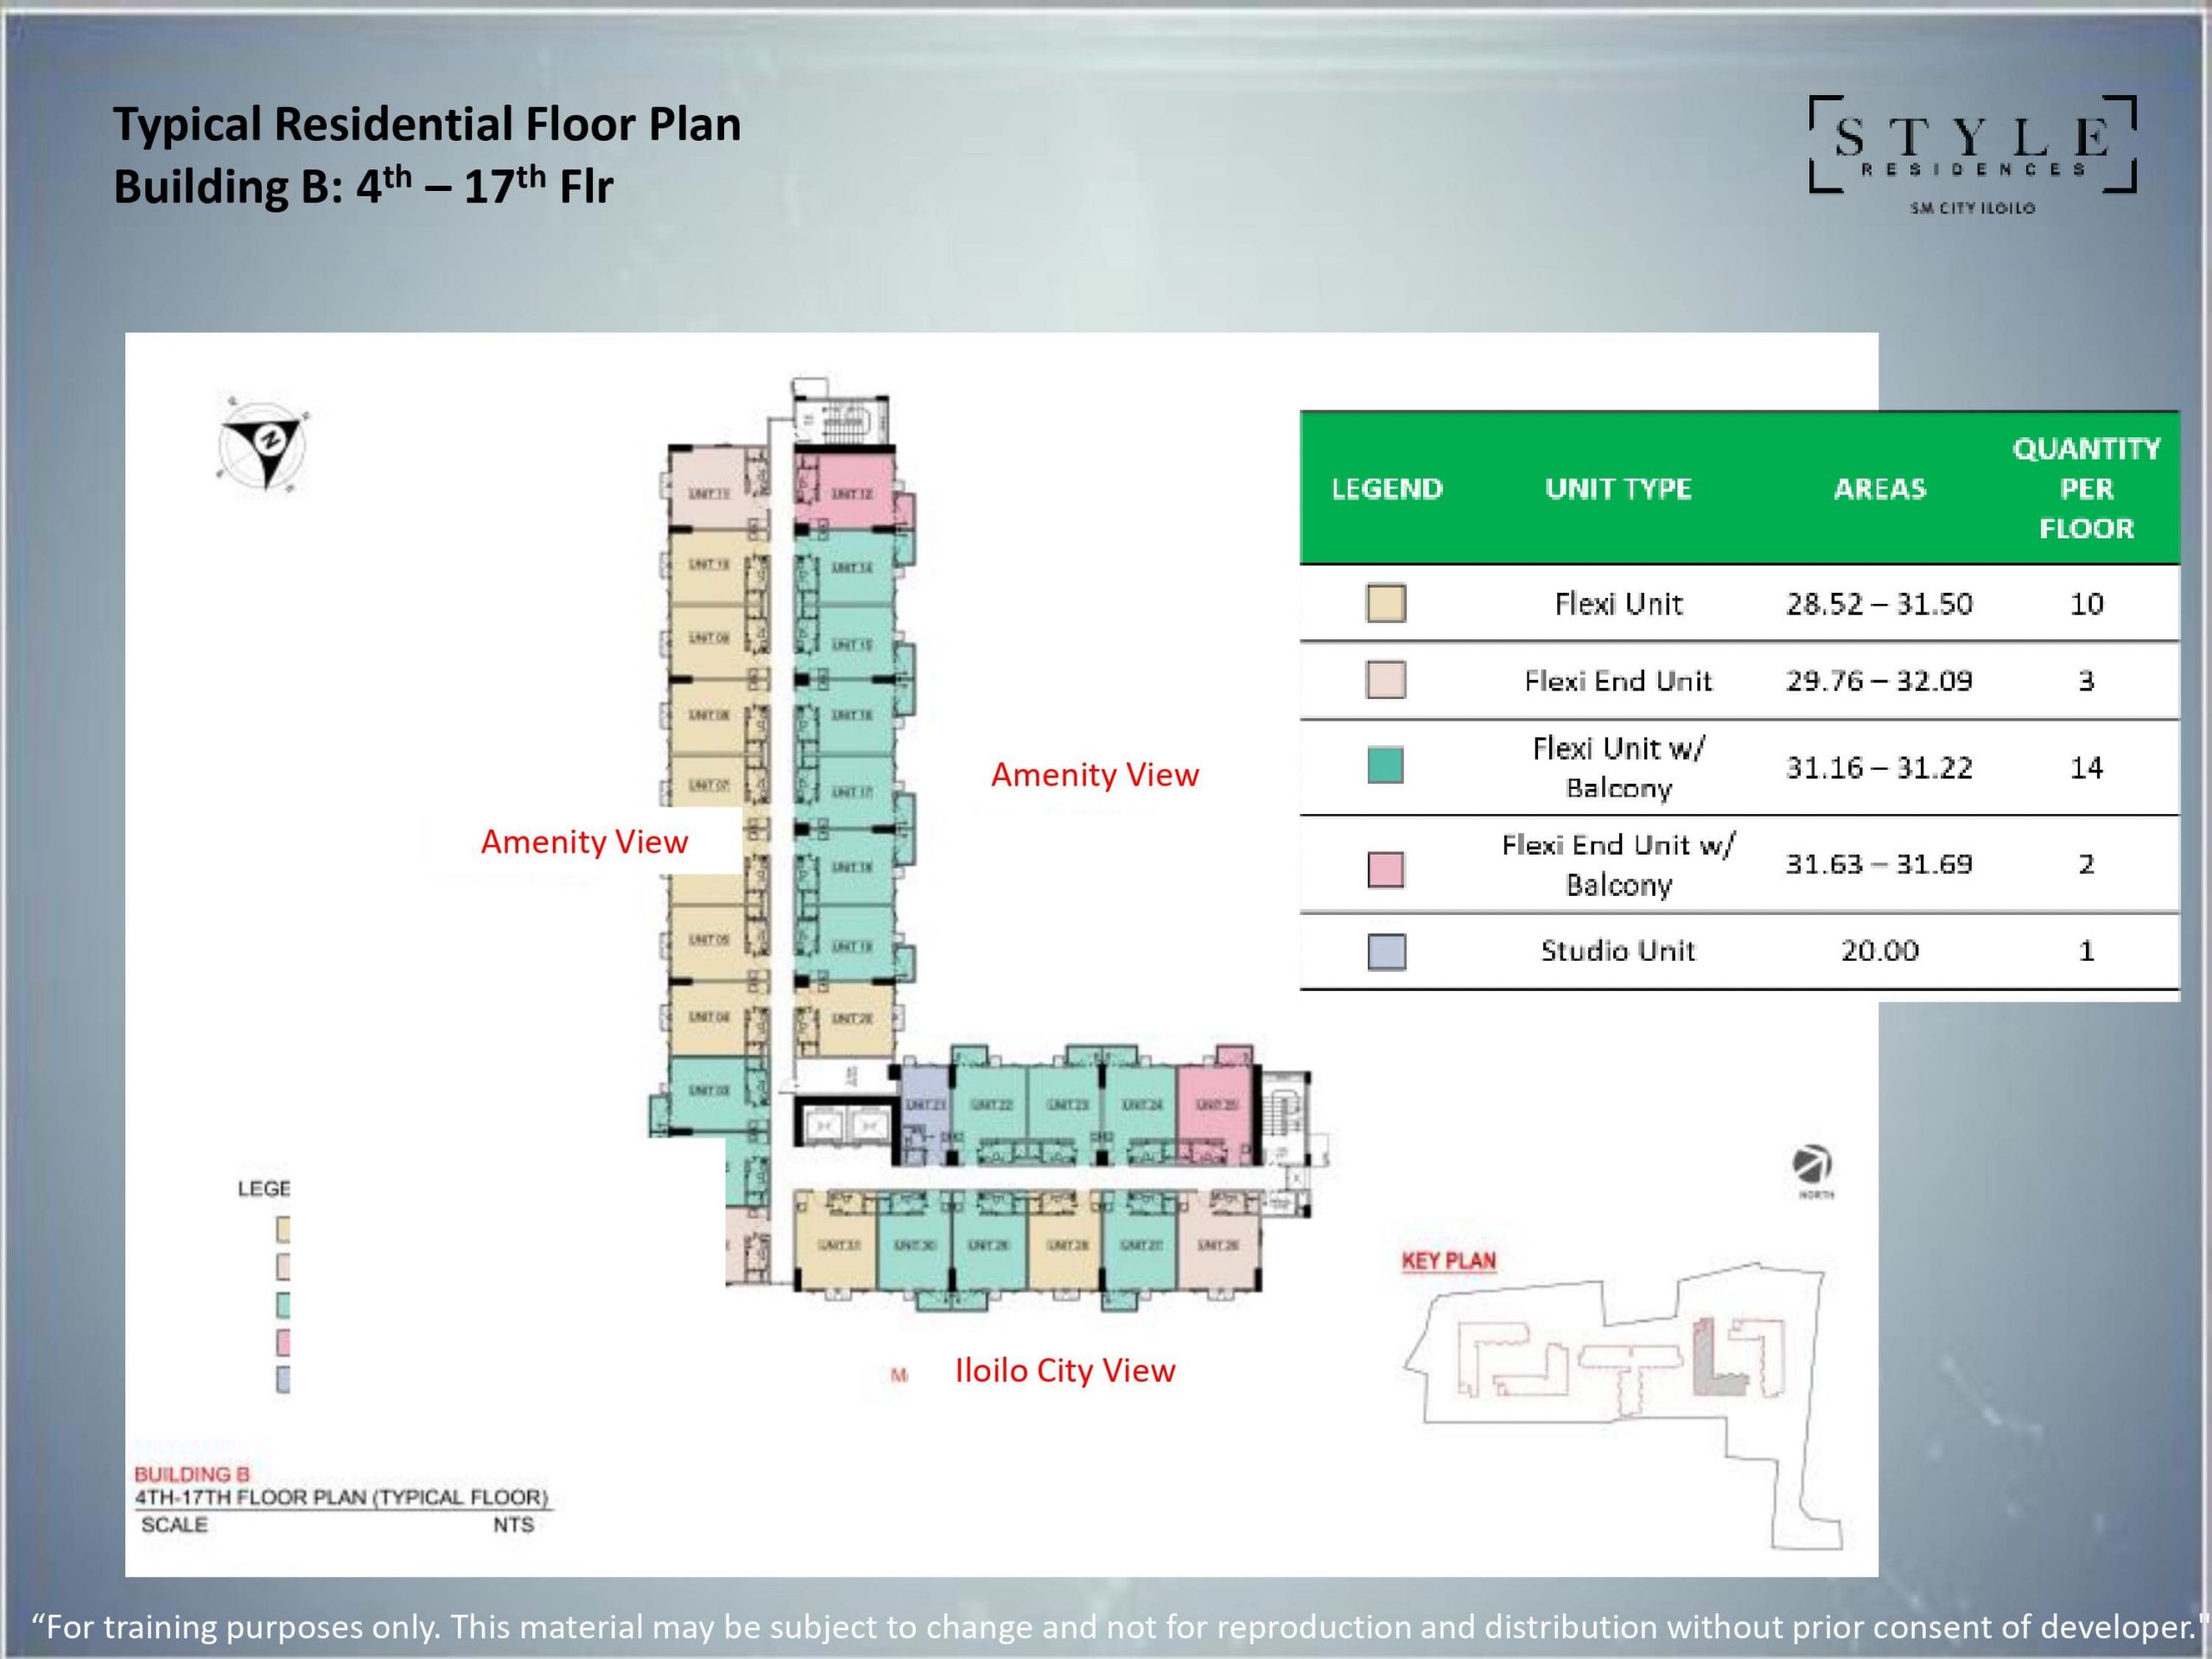 Building B 4th - 17th Floor Plan (Typical Floor)